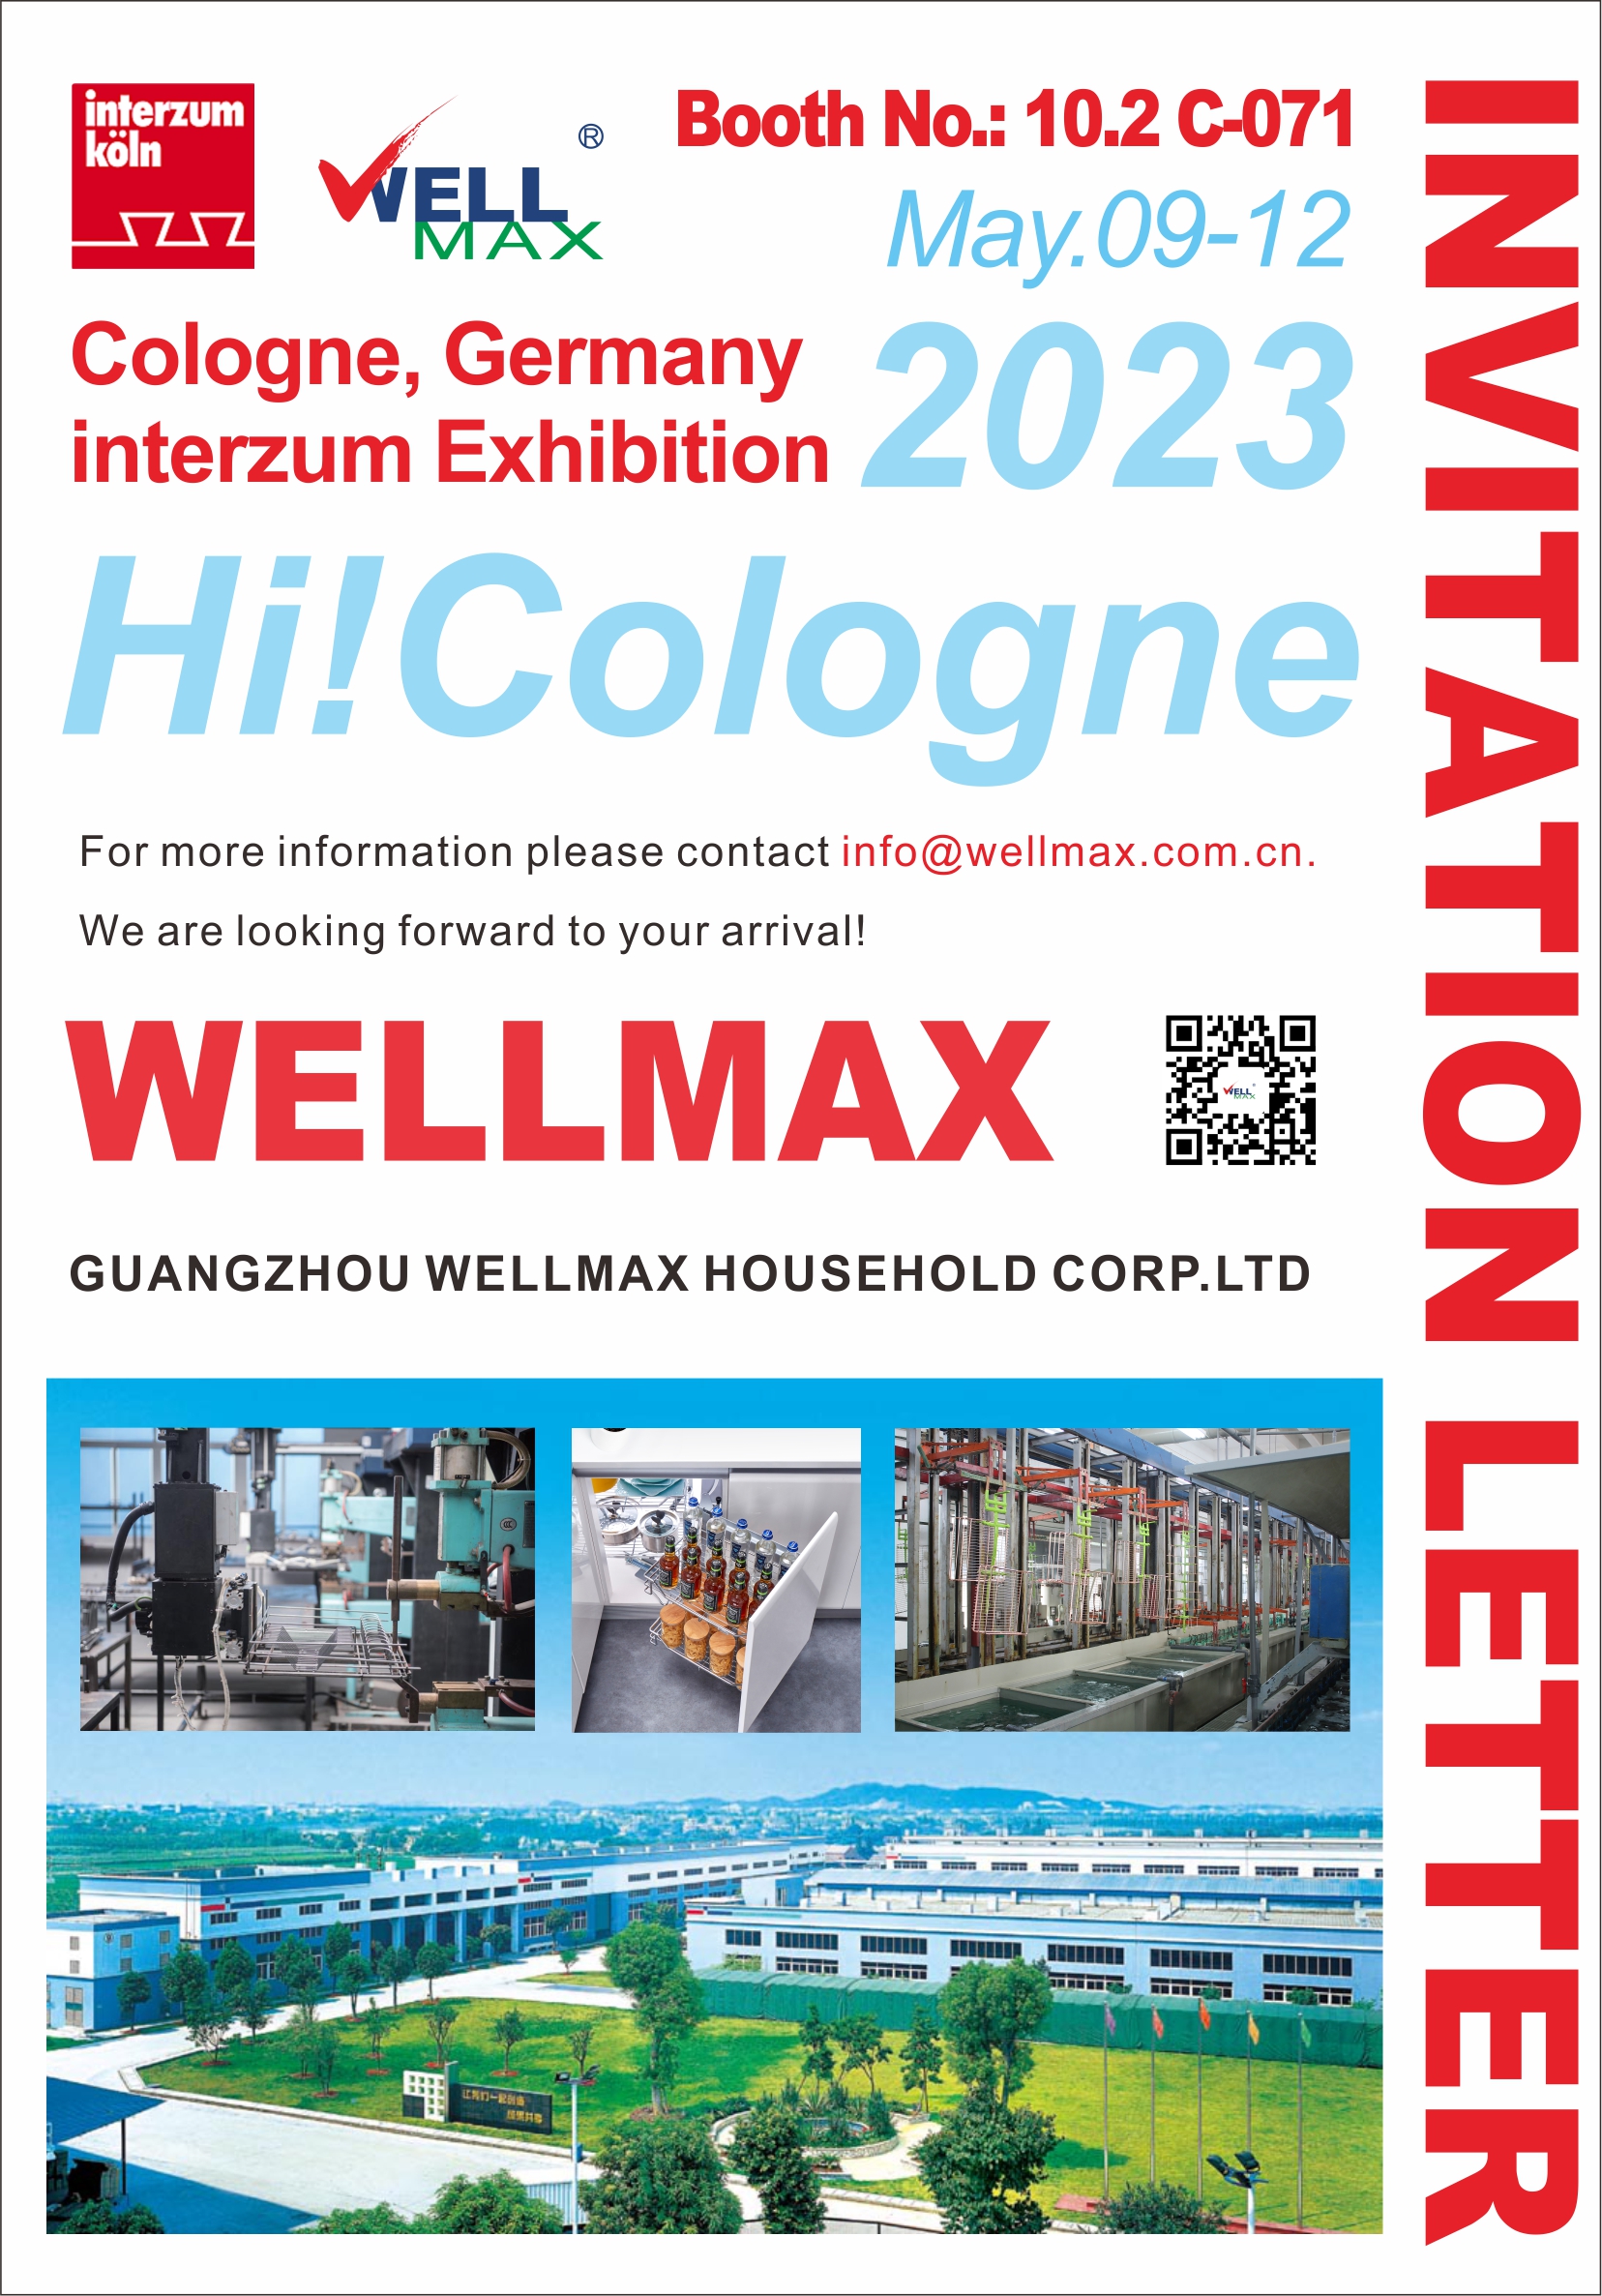 Cologne, Germany interzum 2023 , INVITATION LETTER